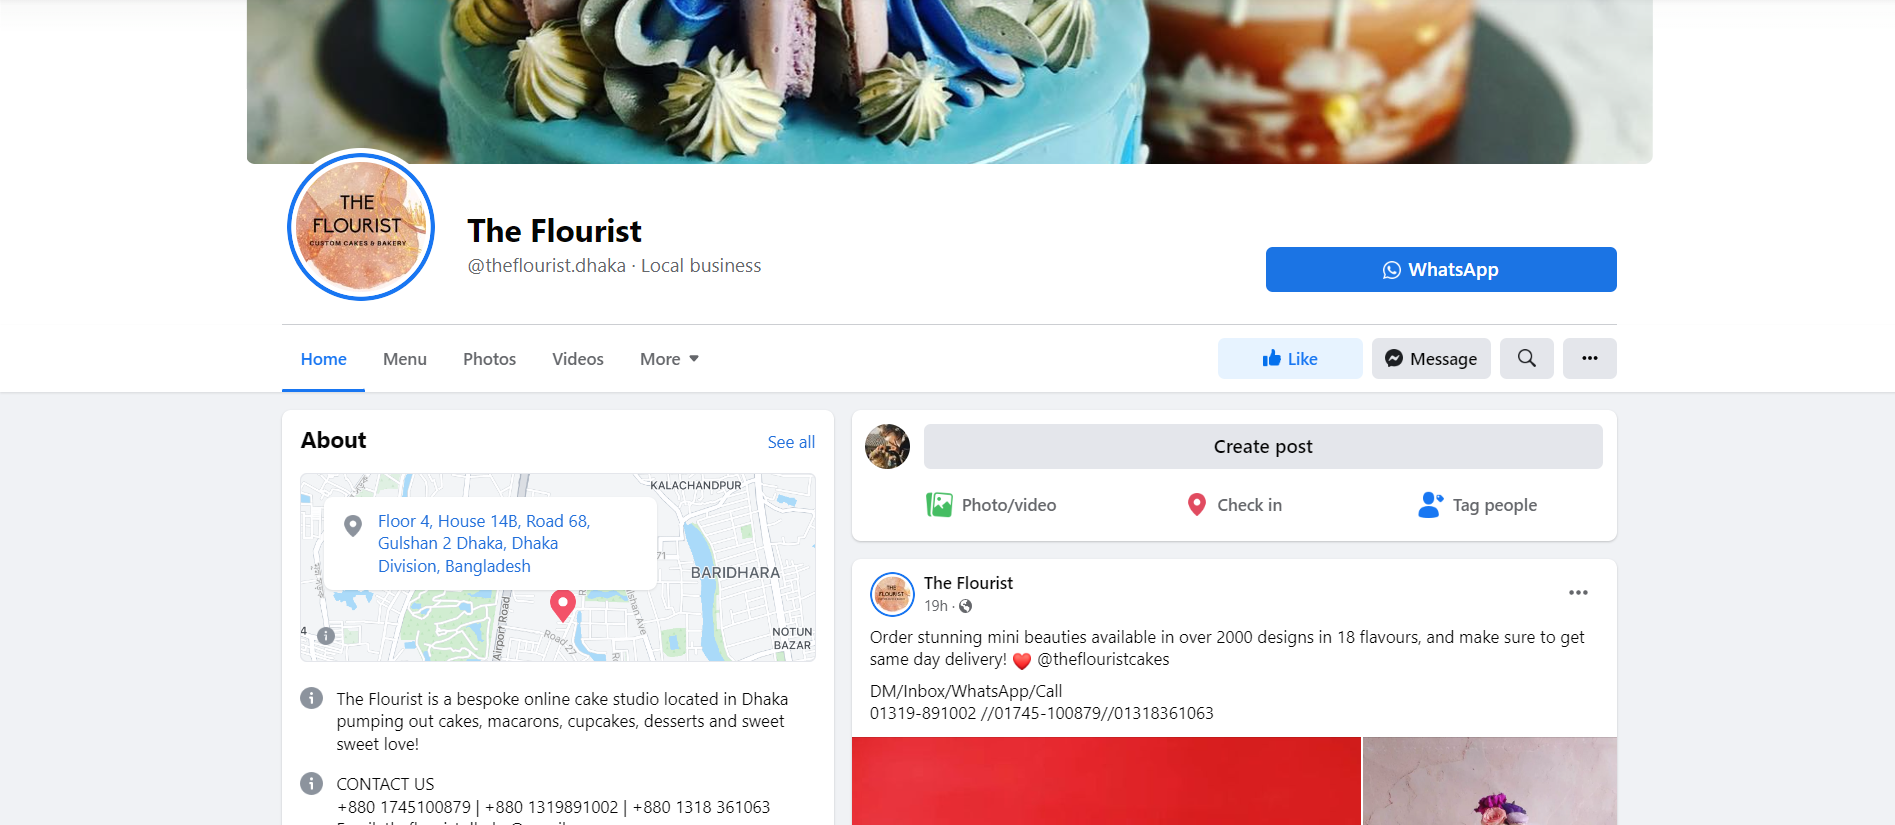 Shopify Facebook Store Example: Flourist